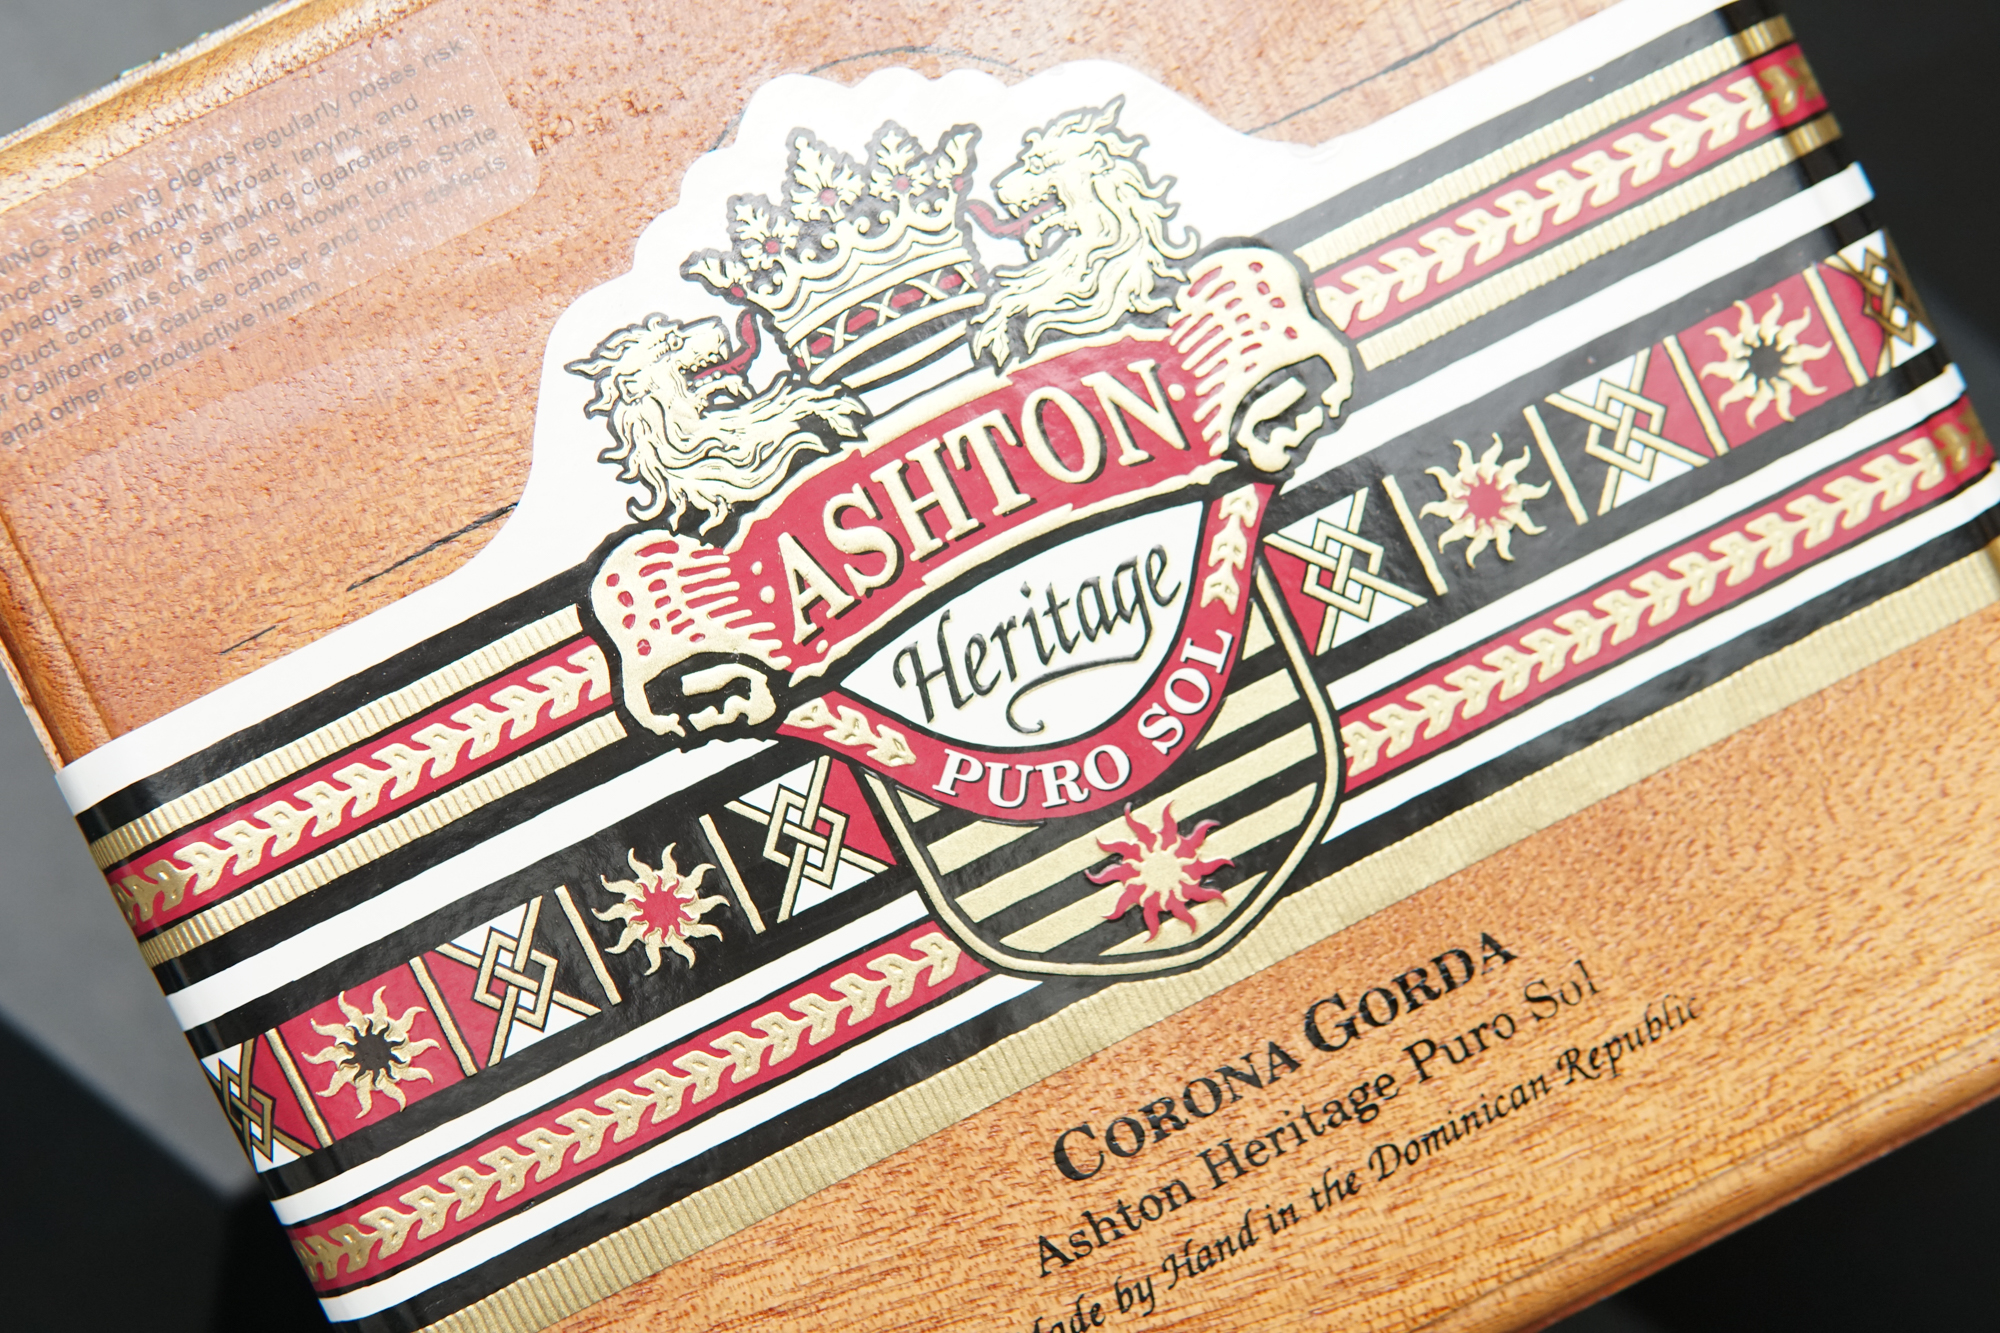 Buy Asthton Heritage Ciagrs Box Online